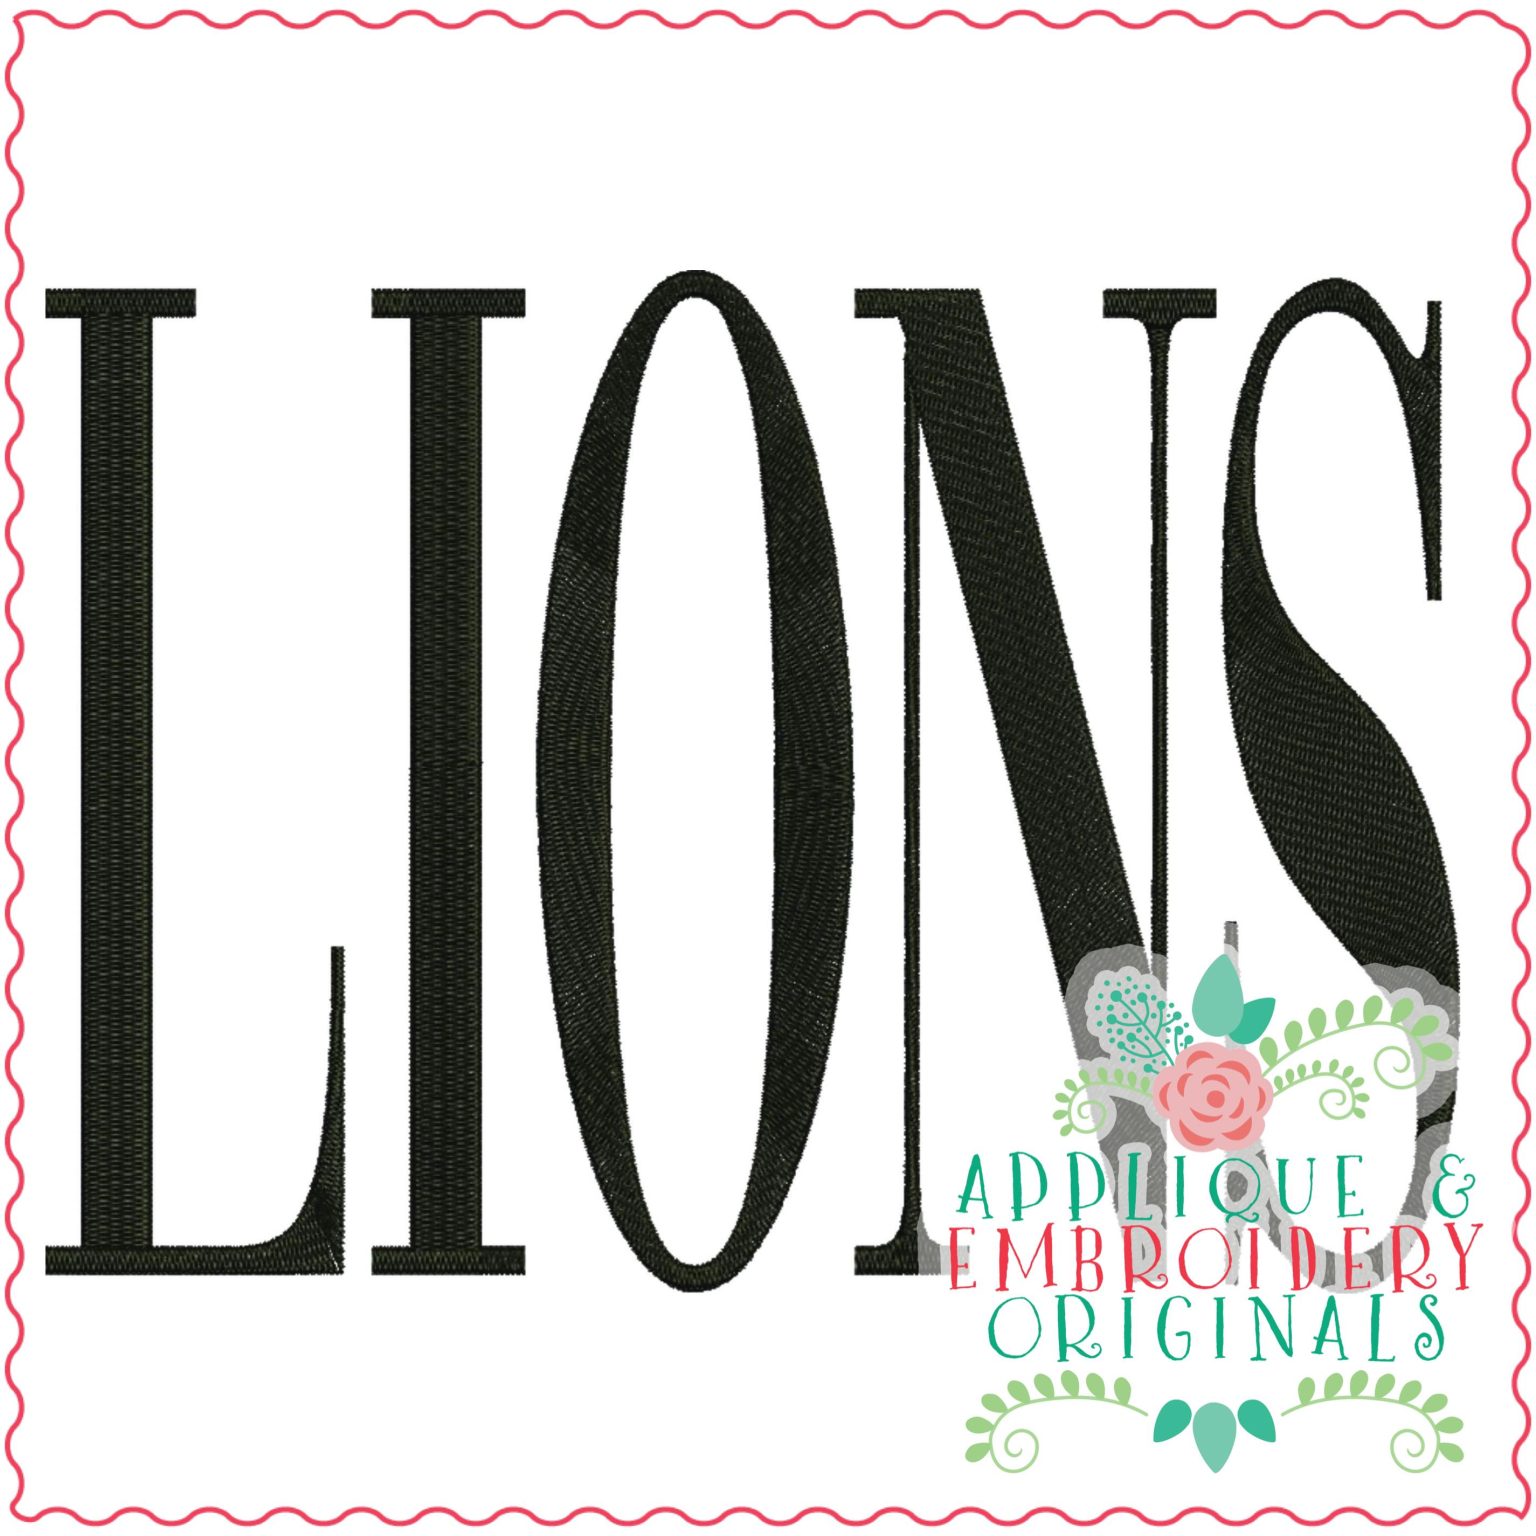 3389 Lions Embroidery Design - Applique & Embroidery Originals